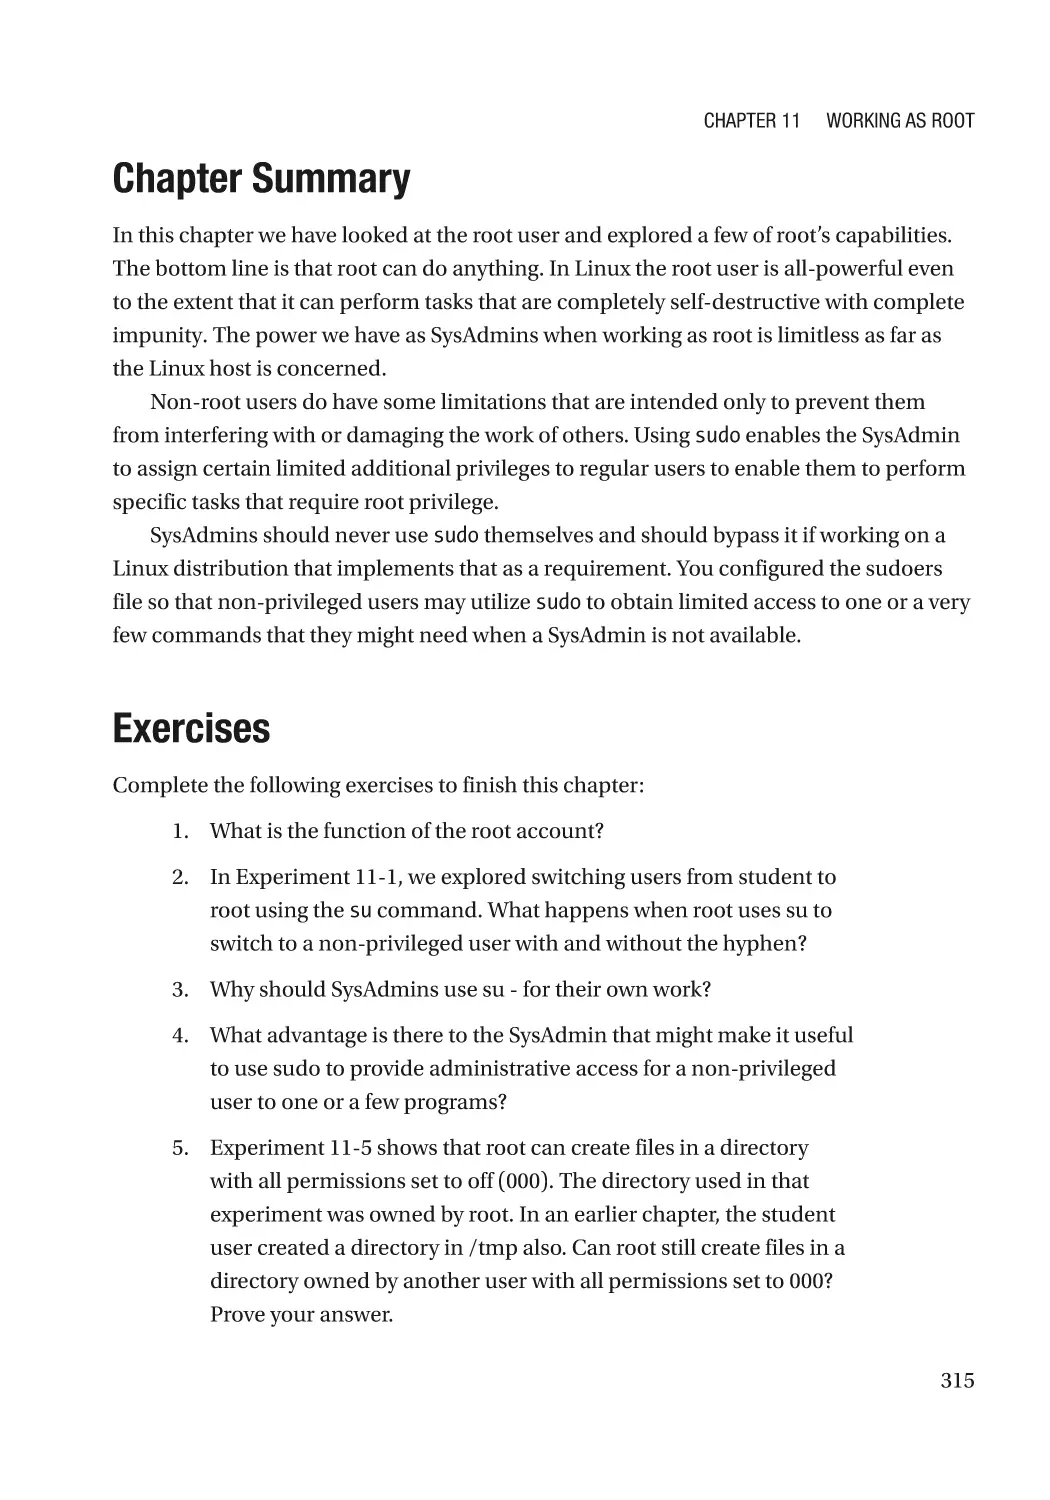 Chapter Summary
Exercises